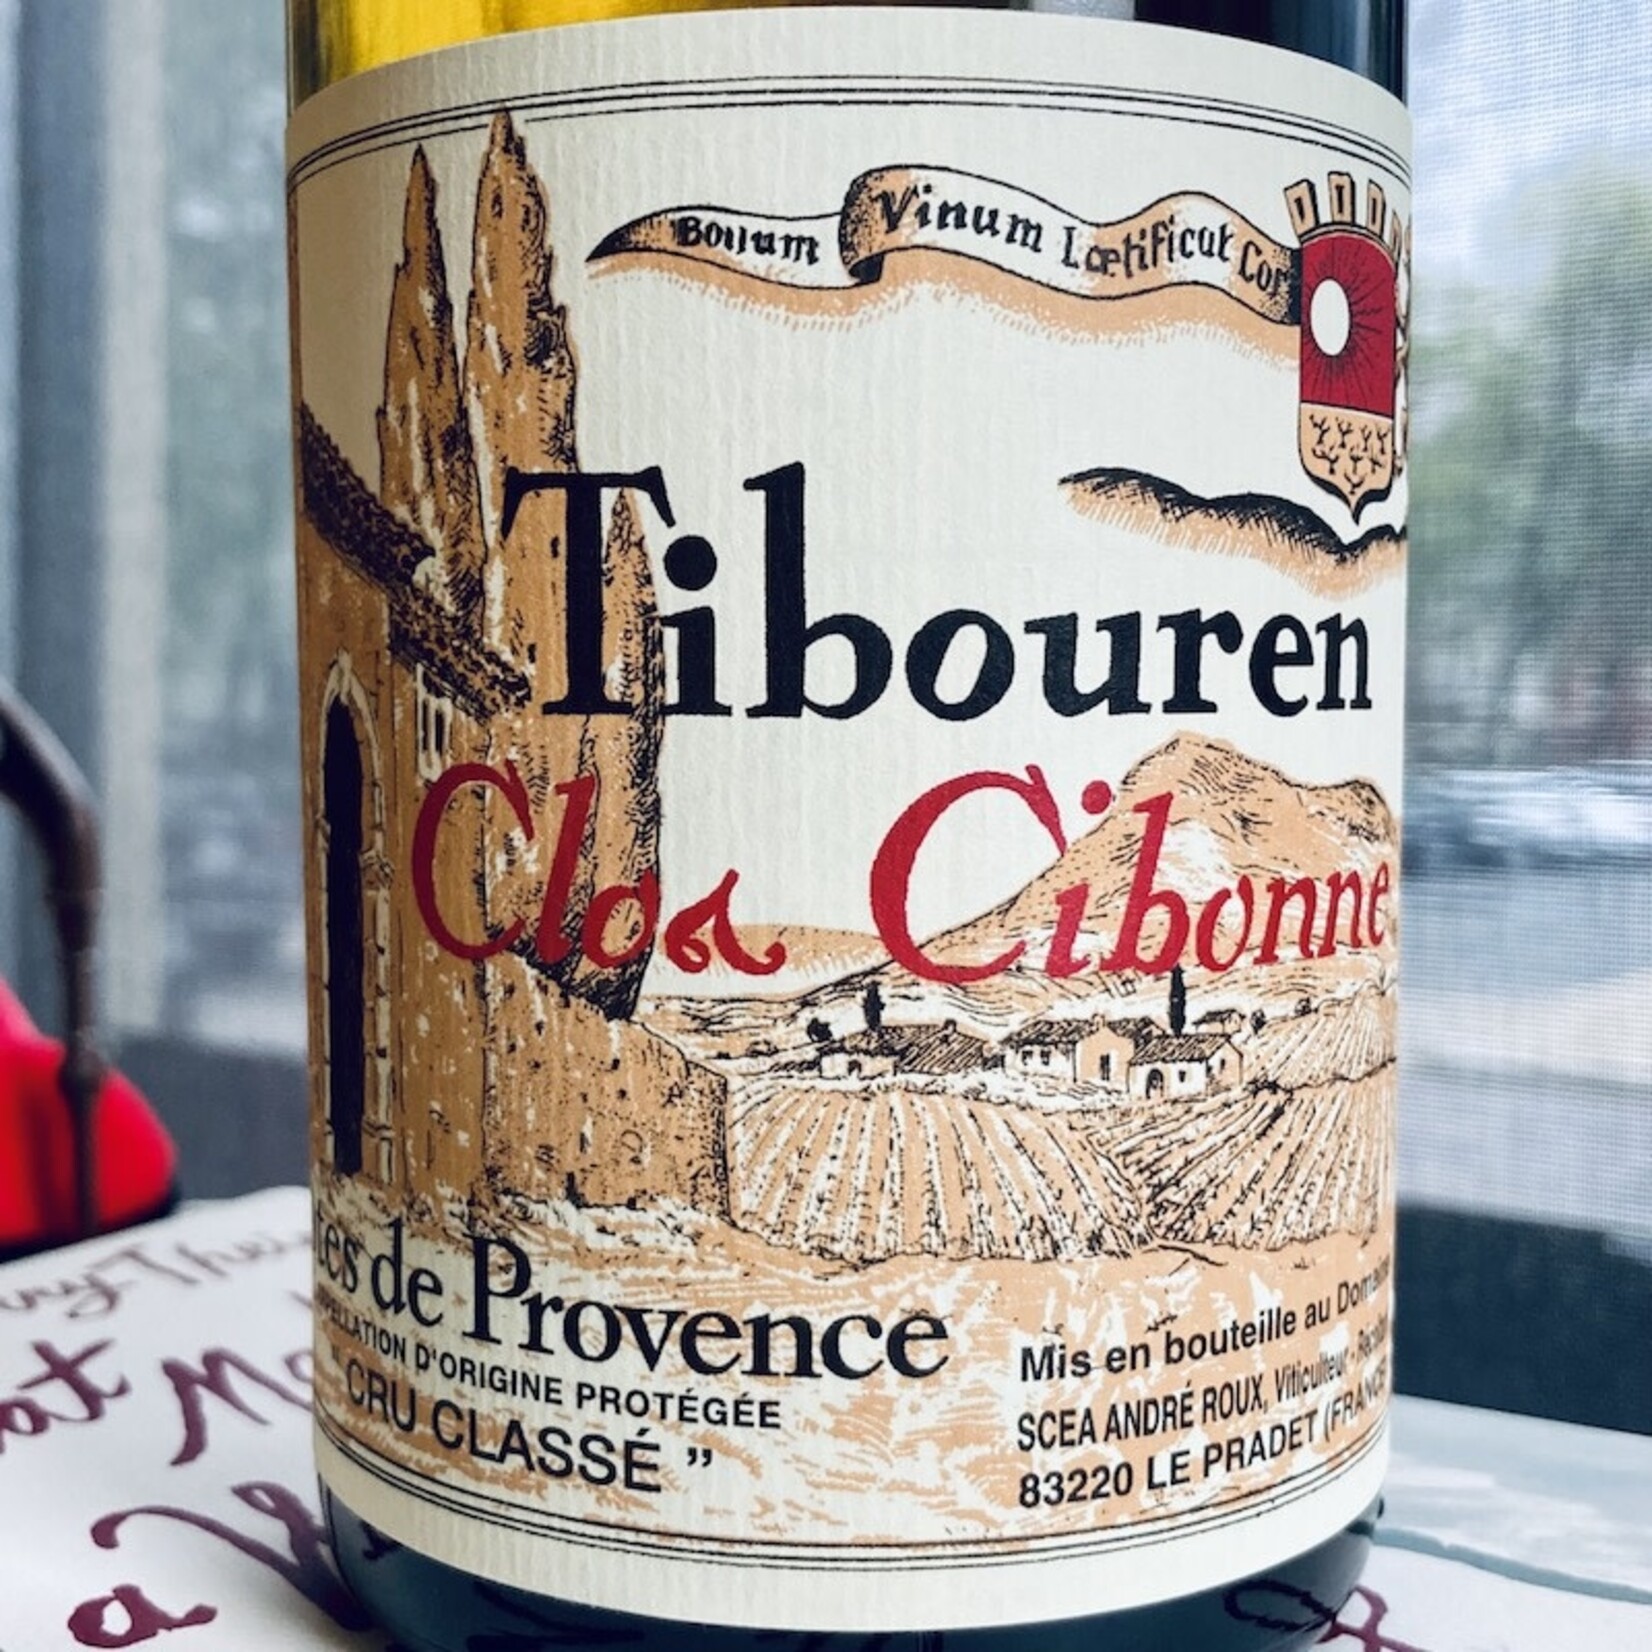 France 2022 Clos Cibonne Cotes de Provence Cru Classe Tibouren “Cuvee Tradition” Rose